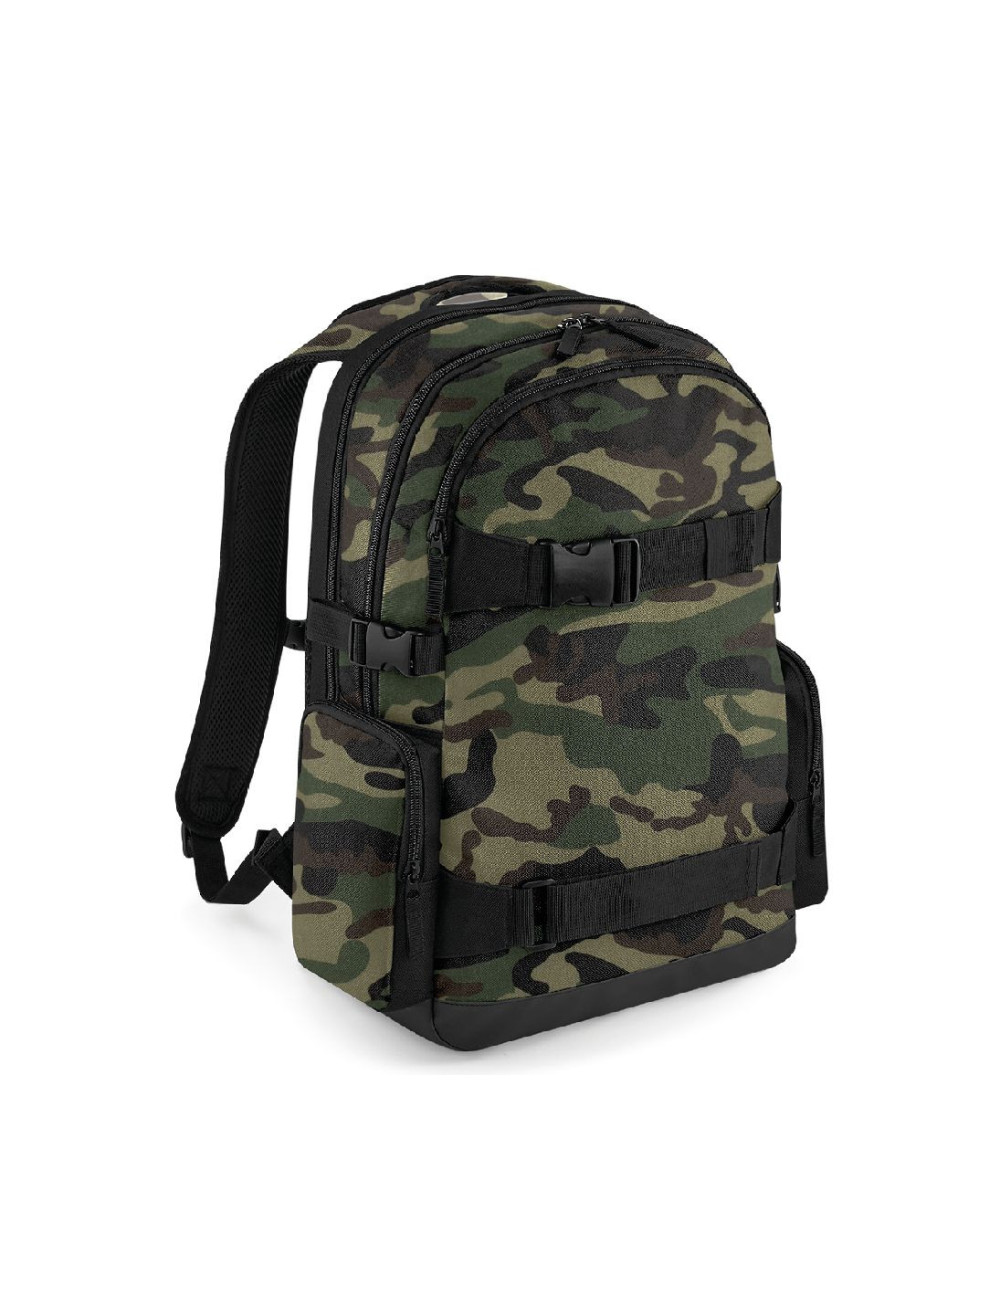 Bagbase BG853 - Old school backpack Snee:0 kleuren:Jungle Camo